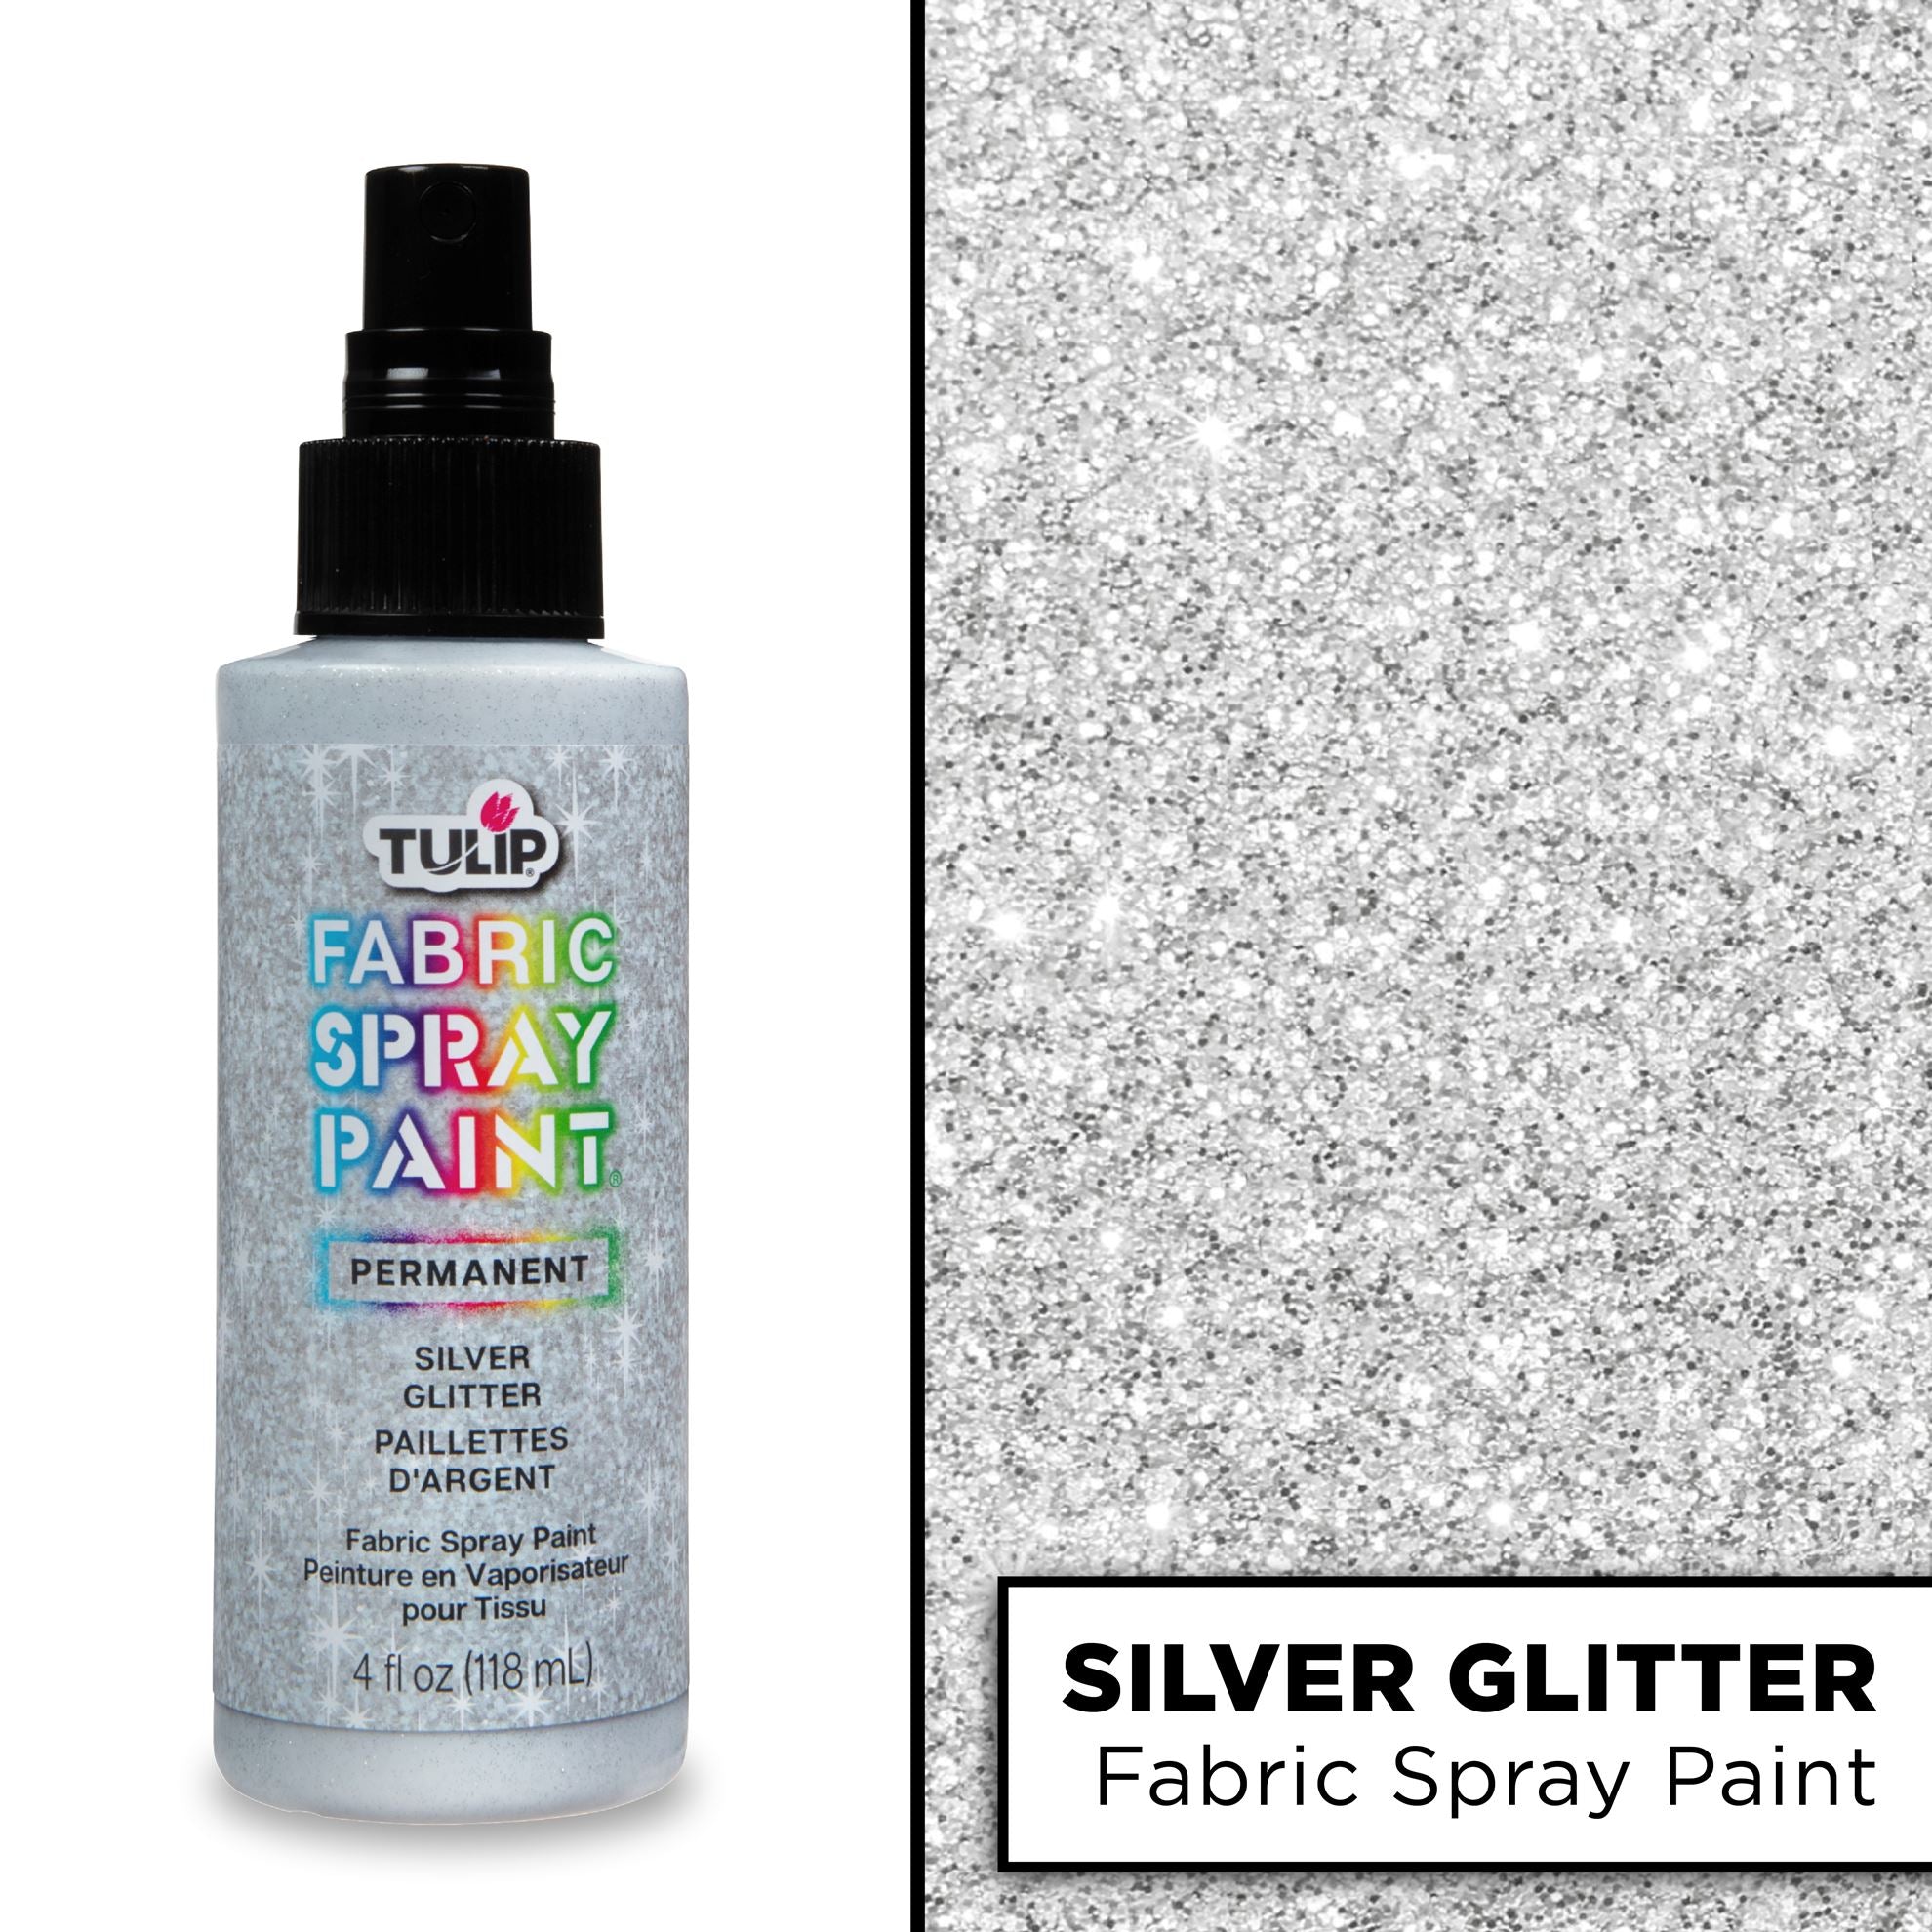 Tulip Fabric Spray Paint Silver Glitter 4 fl. oz. - 3